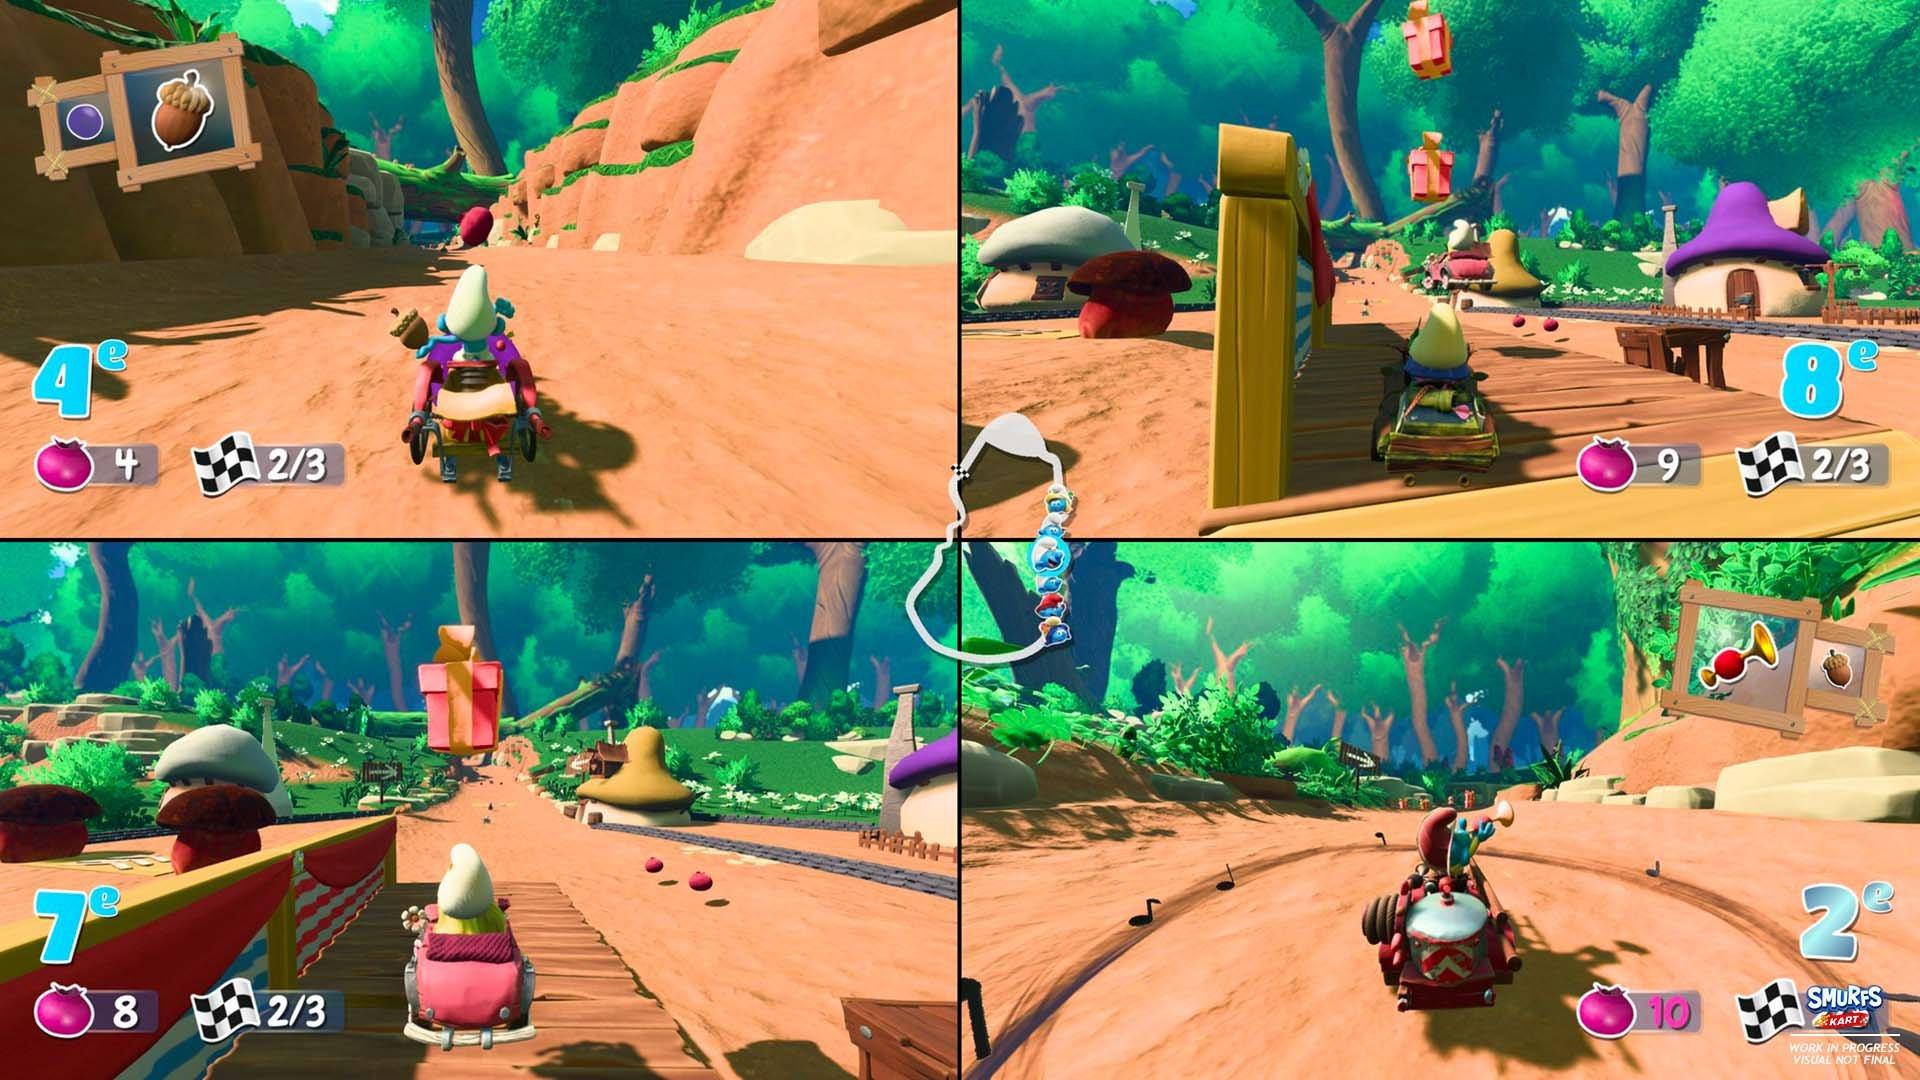 Smurfs Kart - The New Video Game ! - The Smurfs